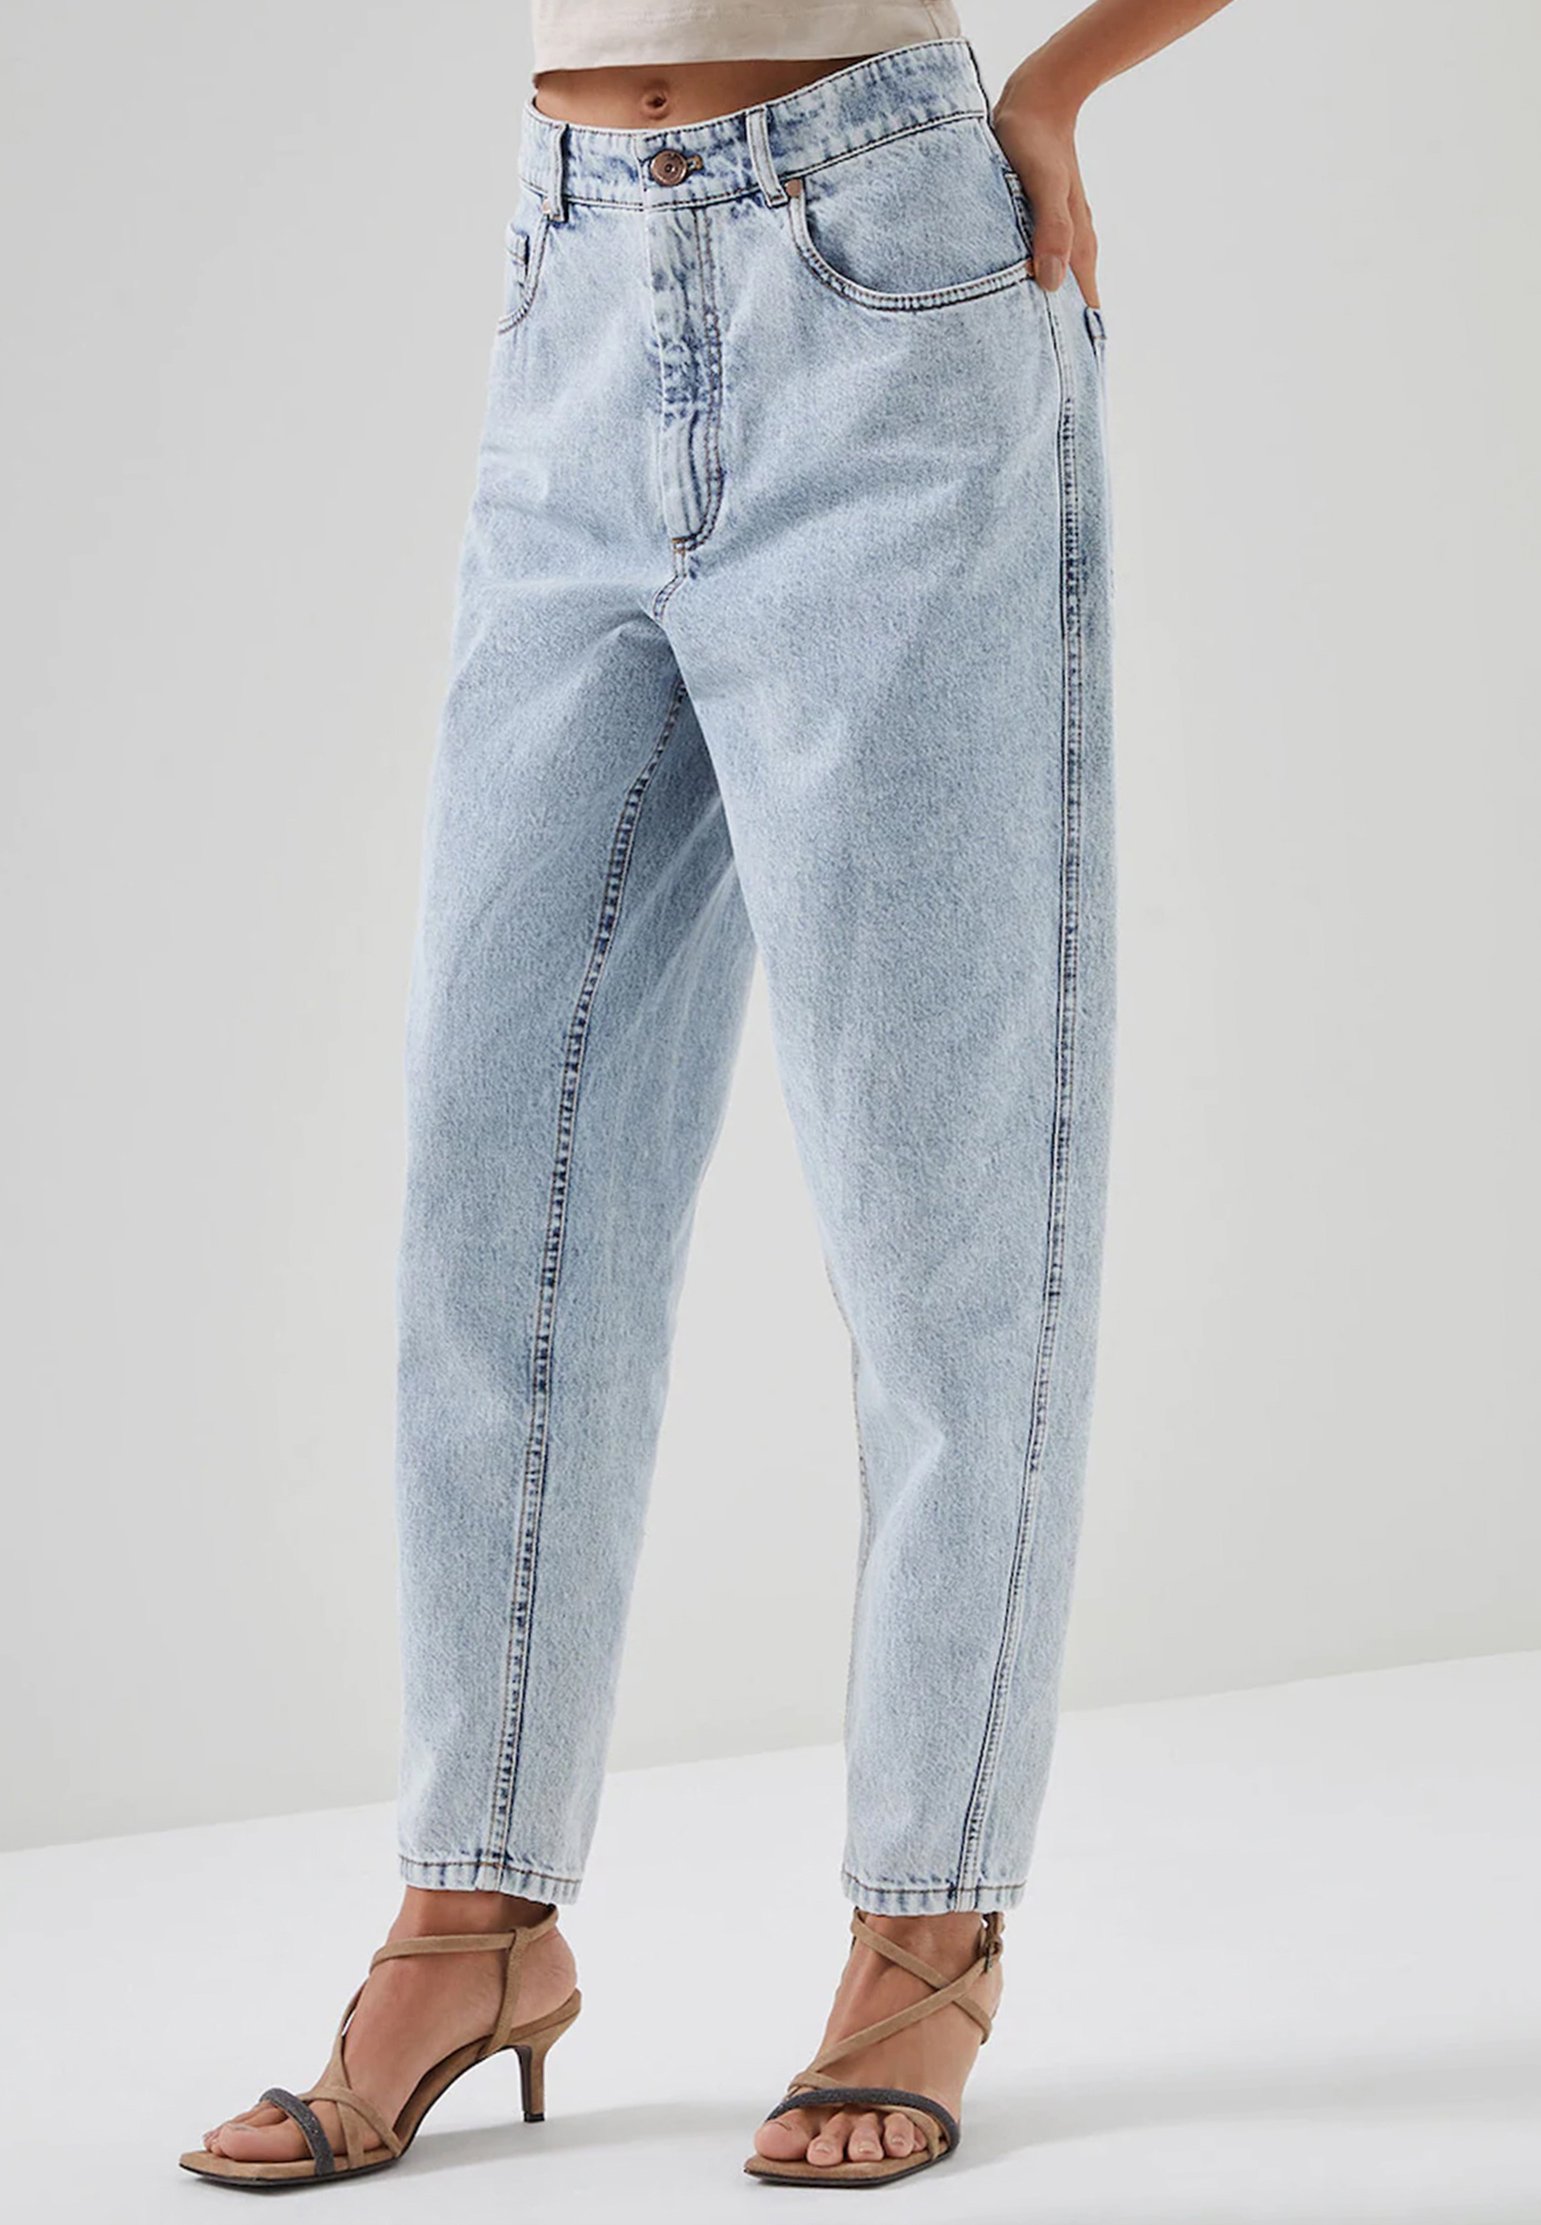 Jeans BRUNELLO CUCINELLI Color: blue (Code: 1538) in online store Allure